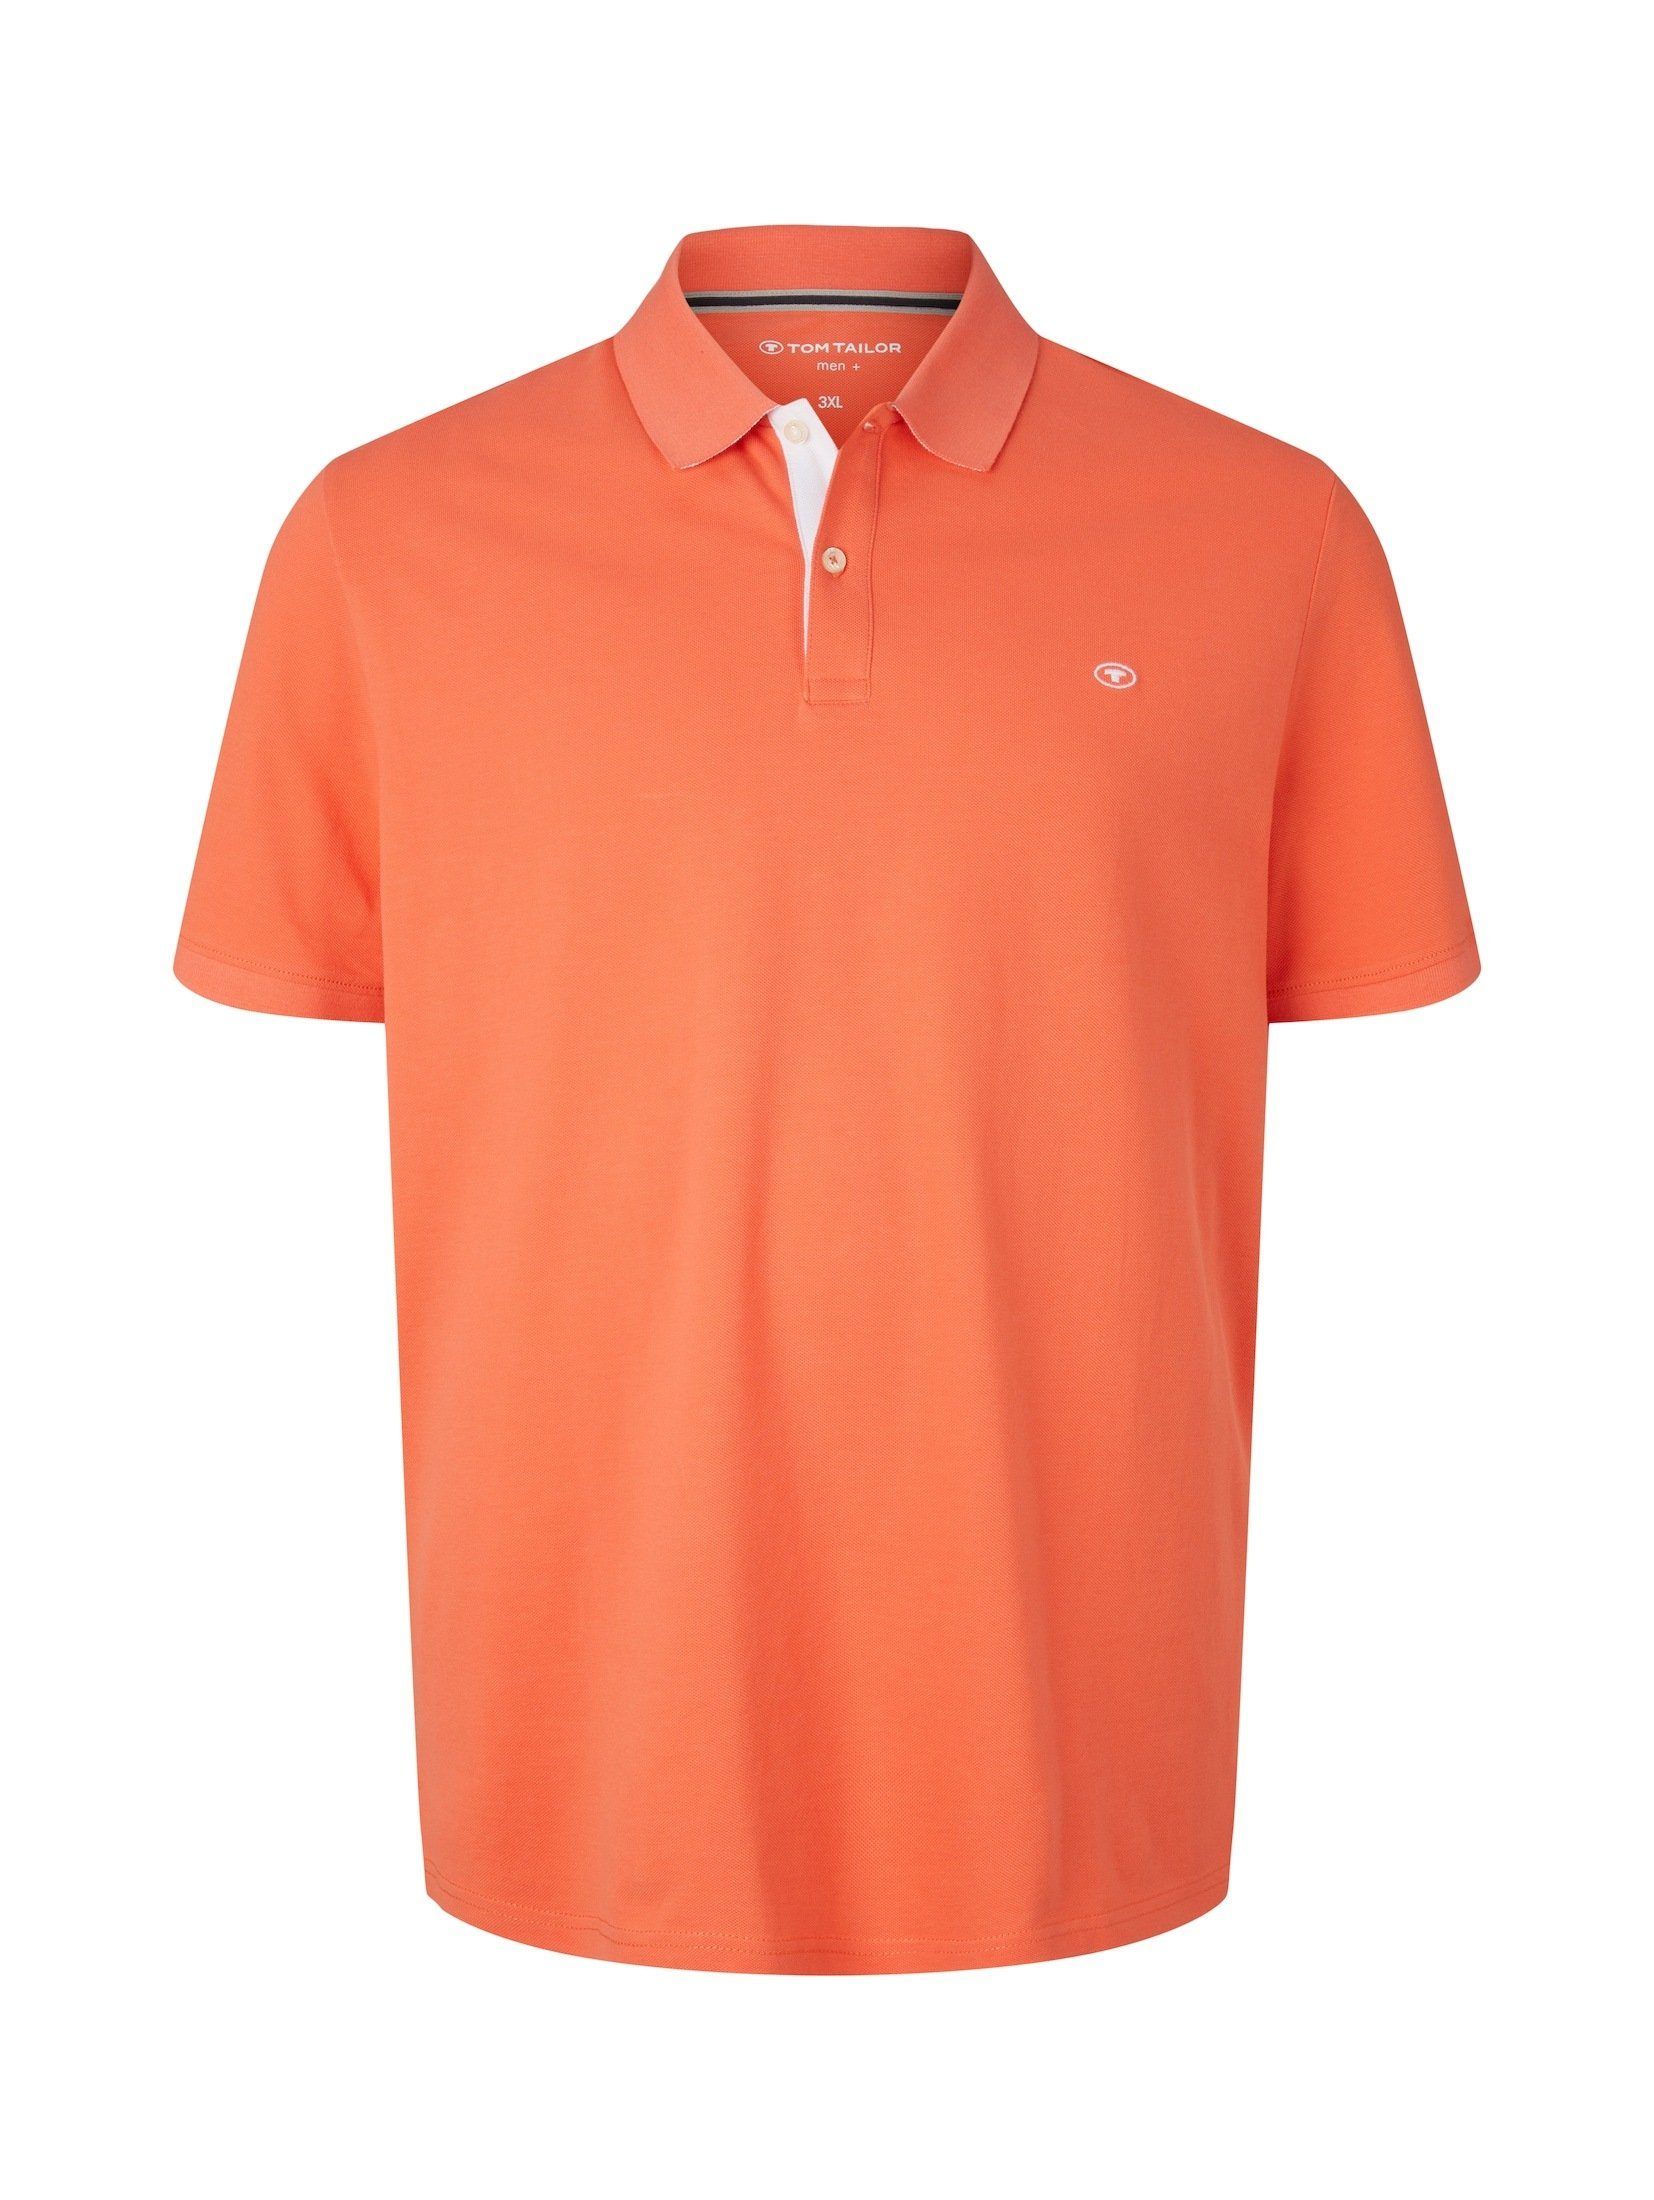 Logoprint mit TOM soft PLUS peach Poloshirt Poloshirt TAILOR orange